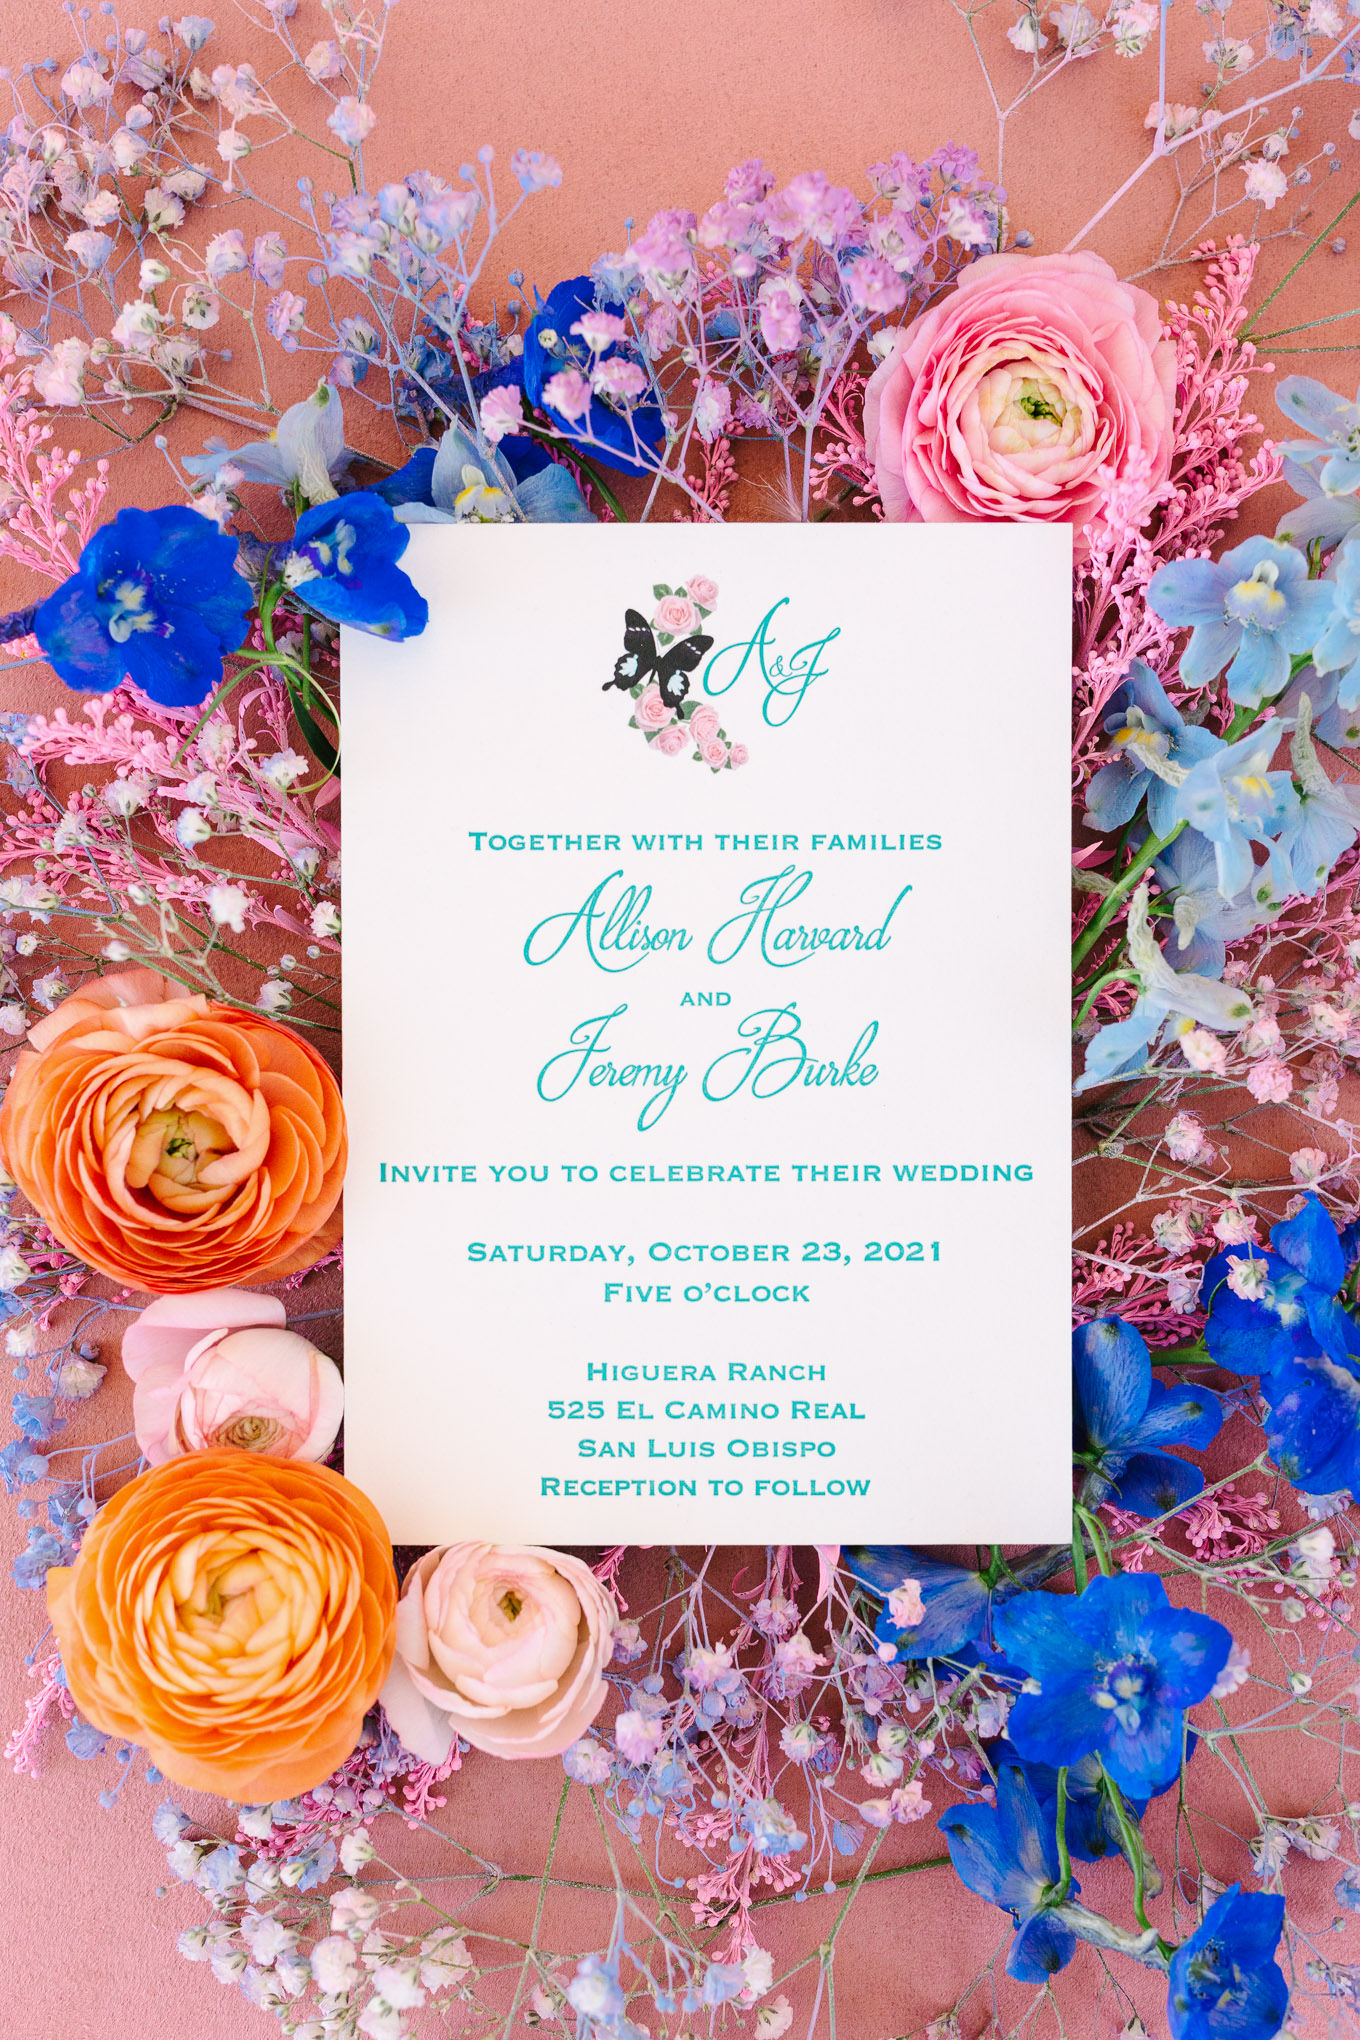 Vibrant florals surrounding wedding invitation | Colorful and quirky wedding at Higuera Ranch in San Luis Obispo | #sanluisobispowedding #californiawedding #higueraranch #madonnainn   
Source: Mary Costa Photography | Los Angeles